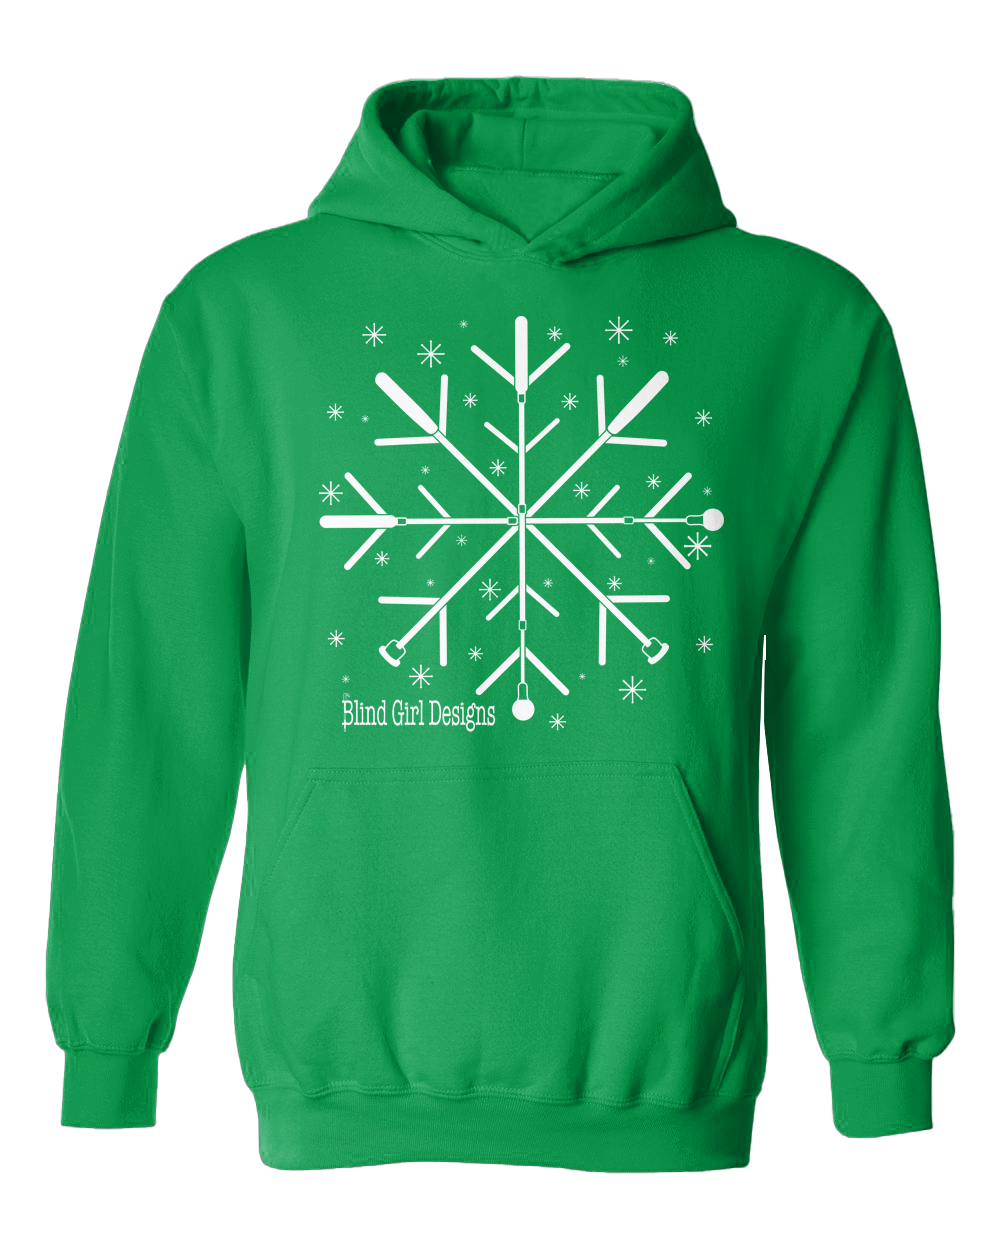 New 3D! Super Tactile Snowflake White Cane Hoodie Sweatshirt - Irish Green